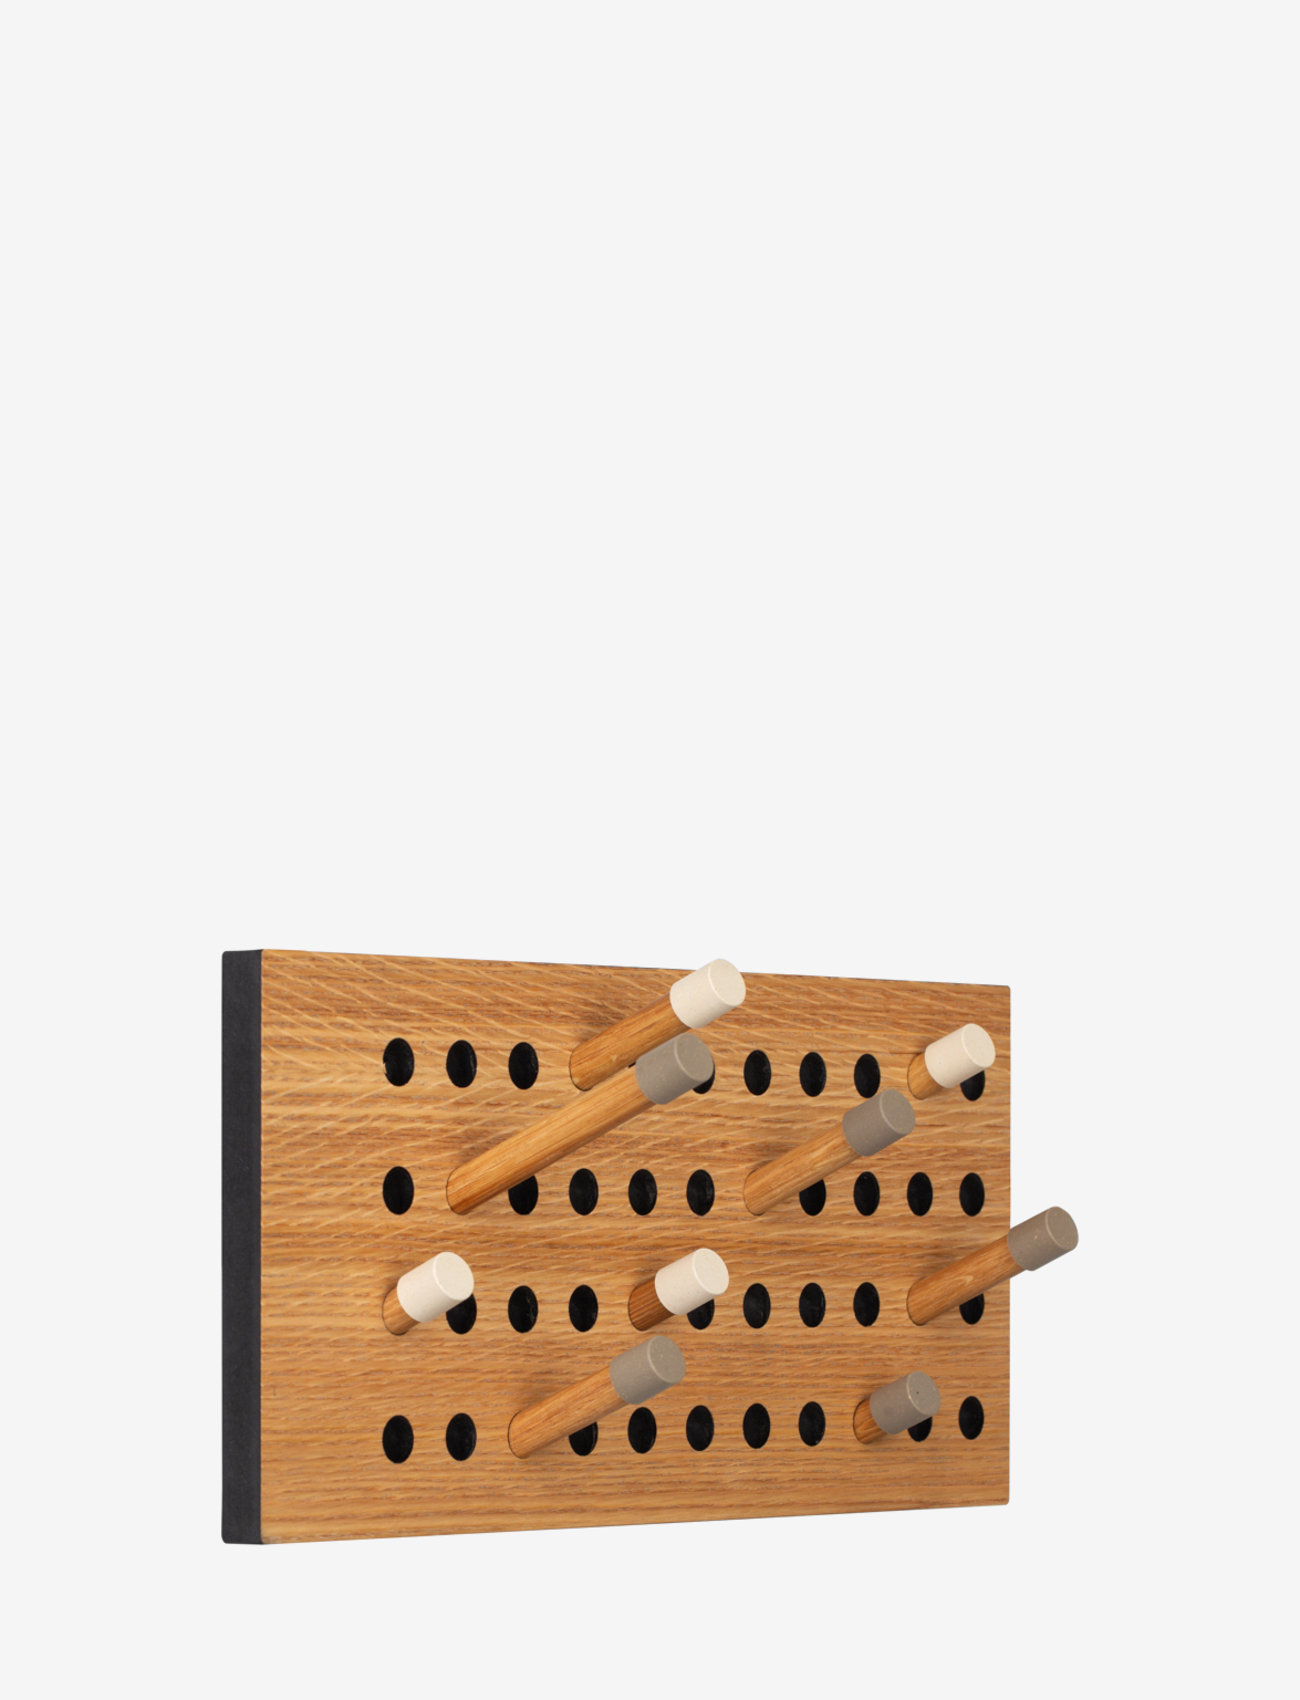 We Do Wood - Scoreboard Small, Horizontal - kleiderhaken & kleiderbügel - fsc oak veneer, dots with upcycled plastic - 1